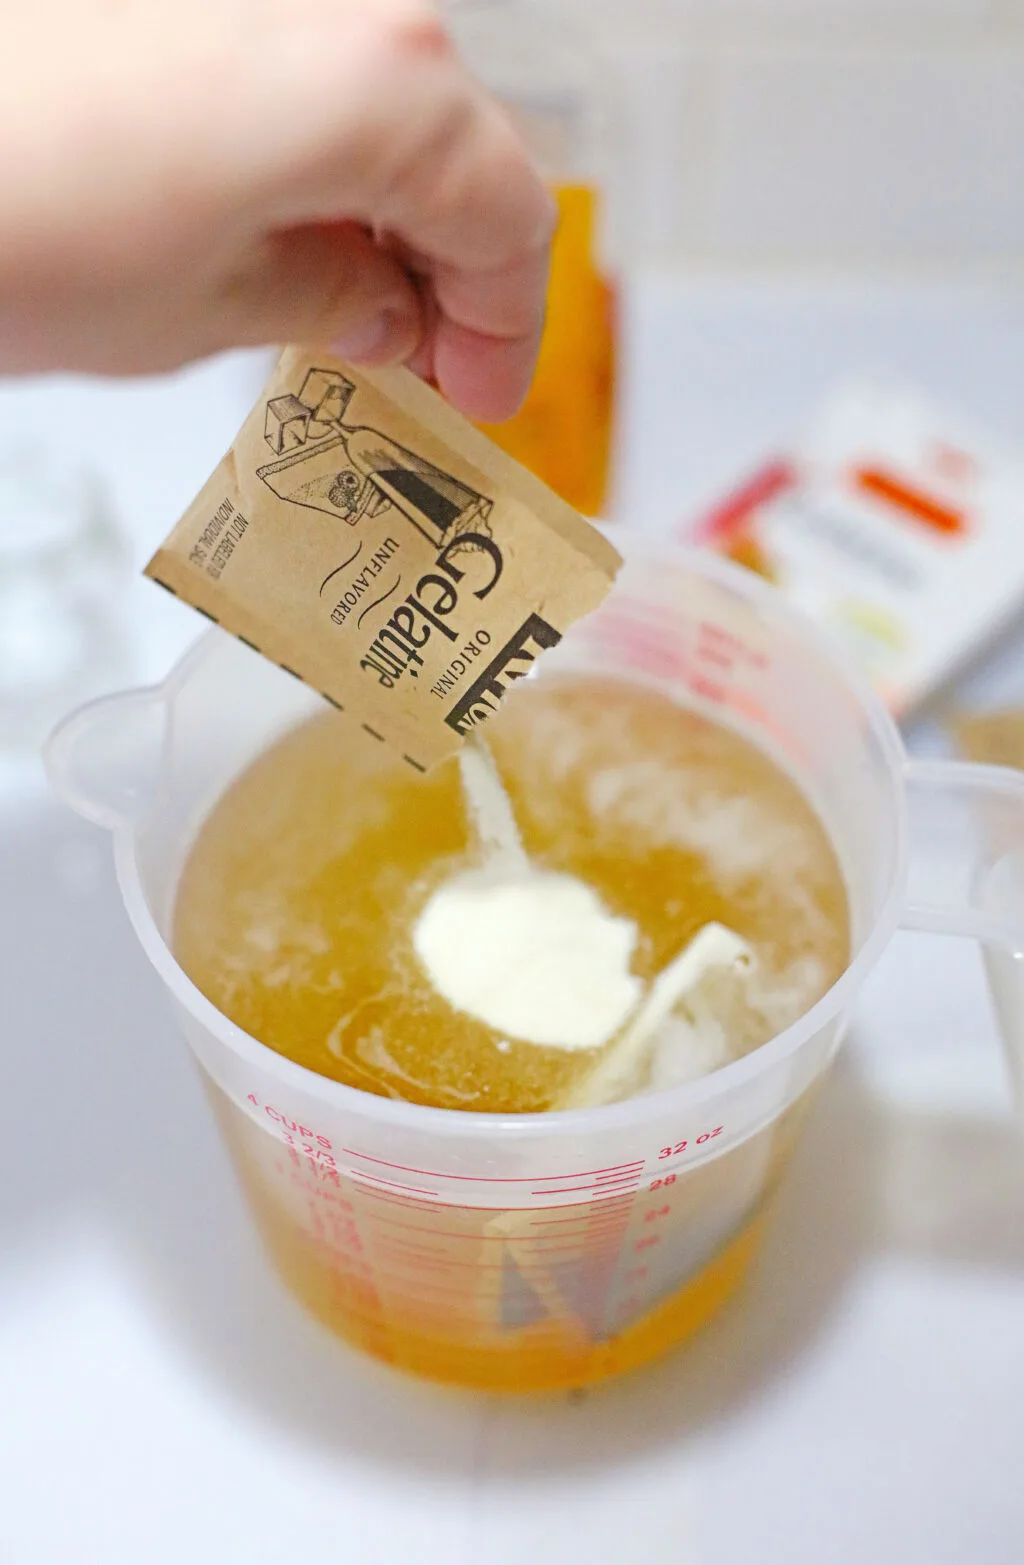 gelatin mix being poured in tea